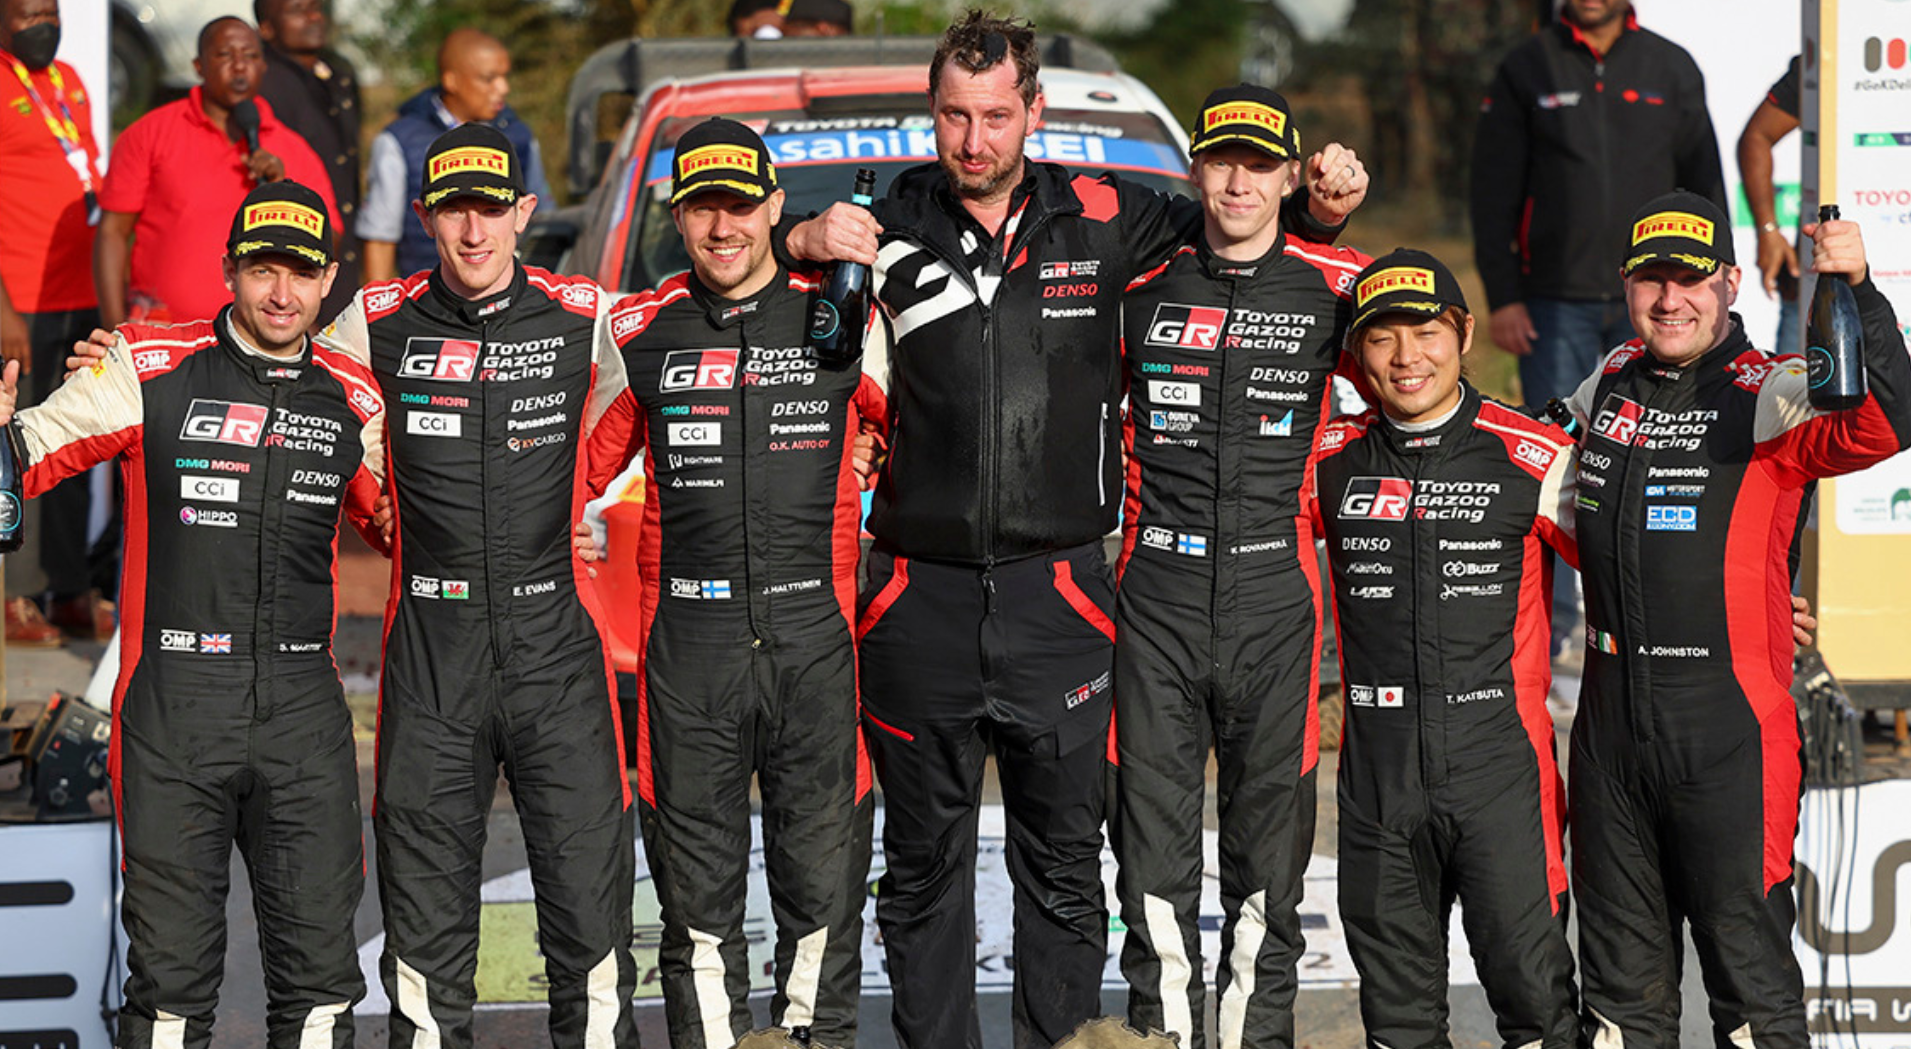 Meet the TGR World Rally team